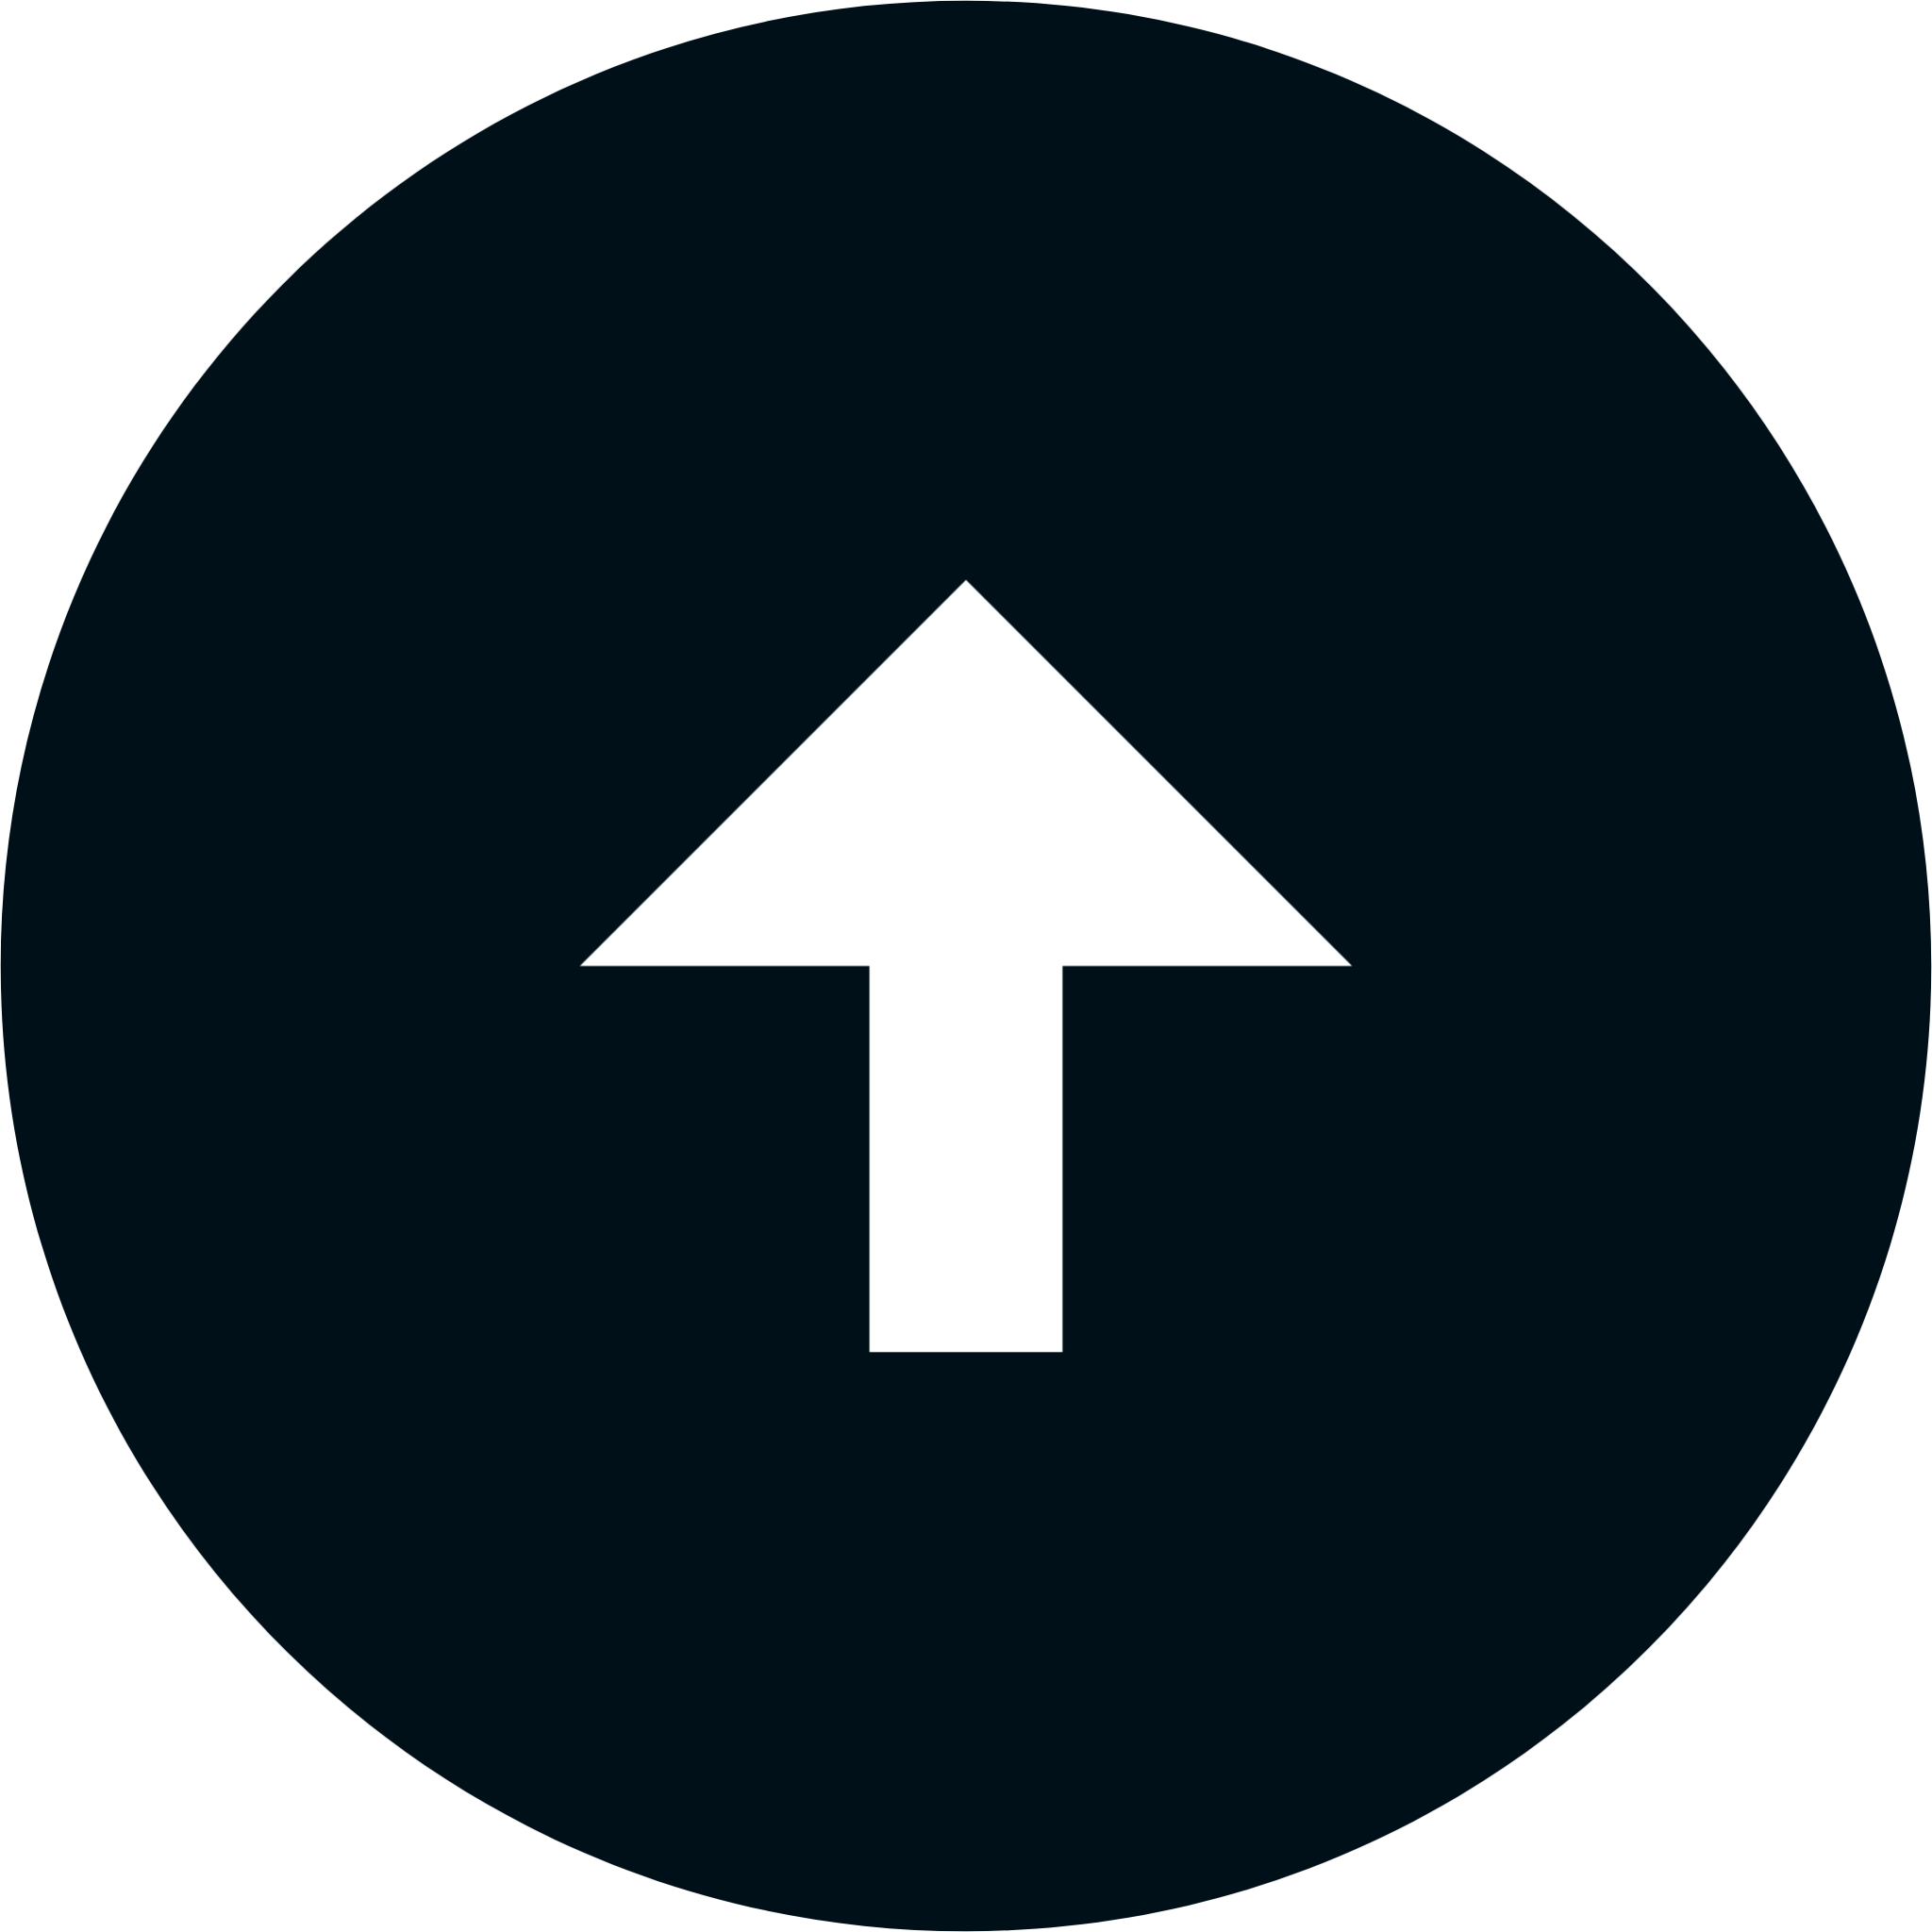 arrow up circle fill icon